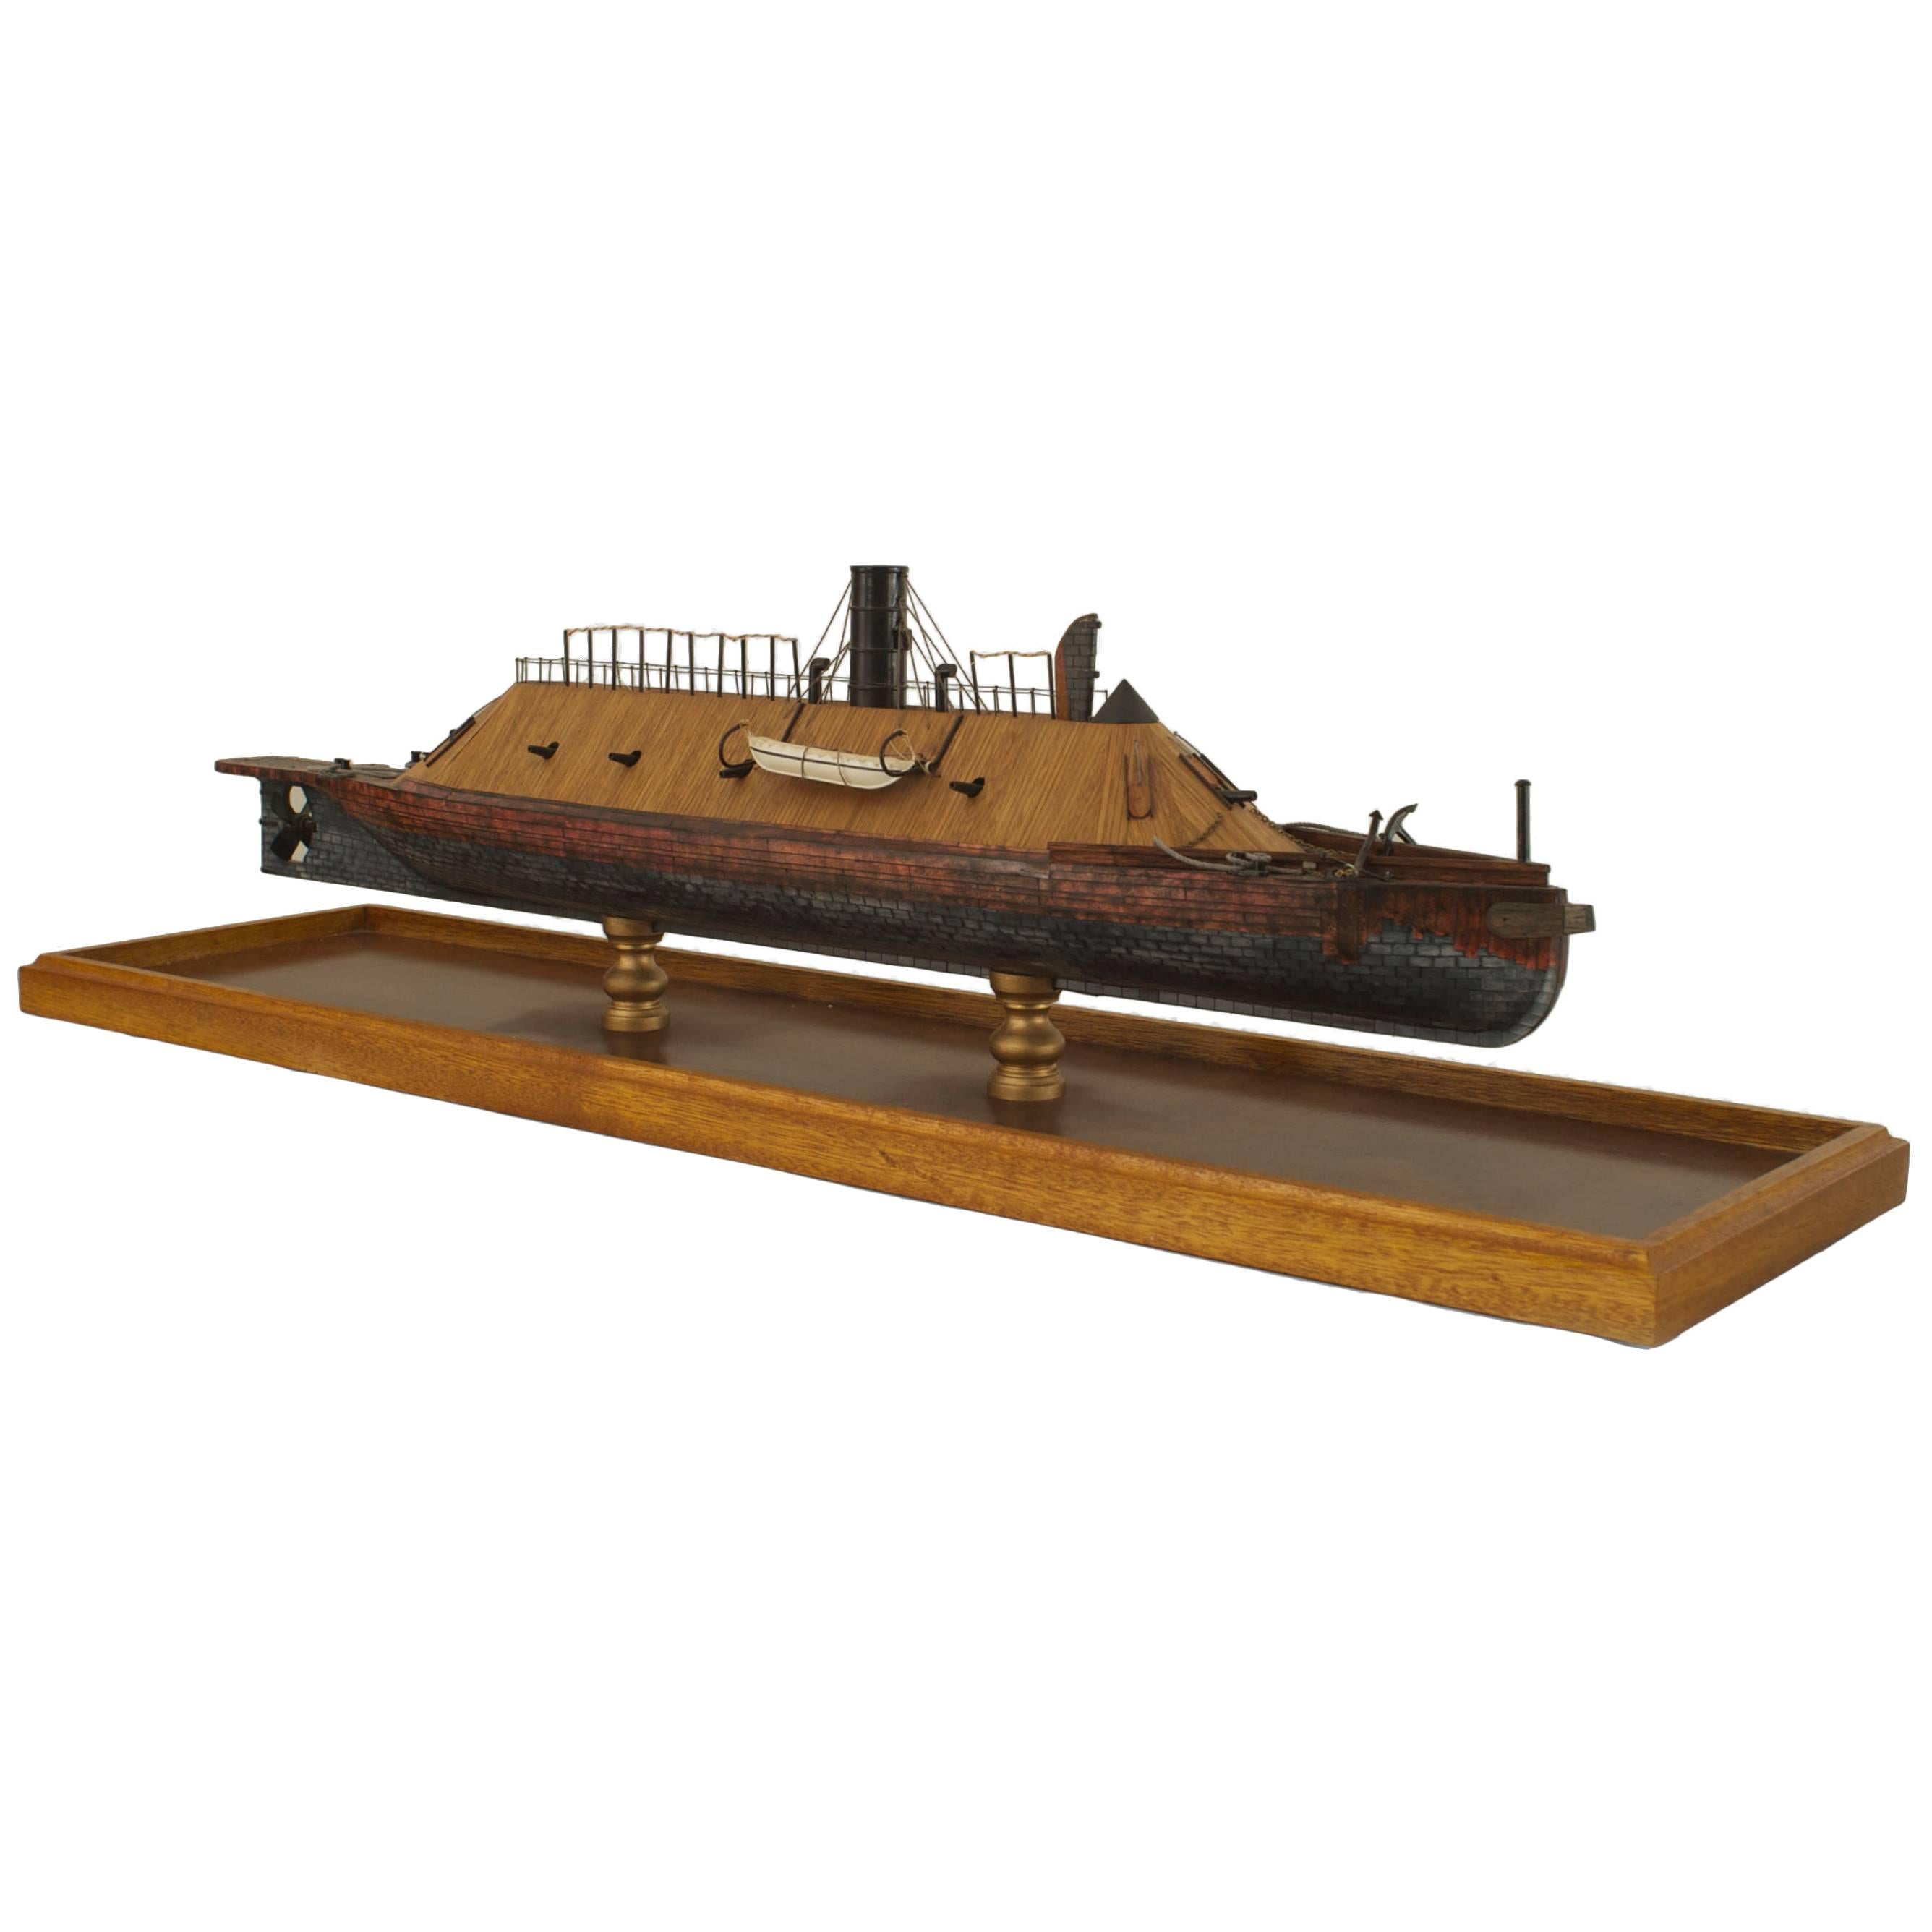 19th Century American Model of the Civil War Era Ship CSS Virginia